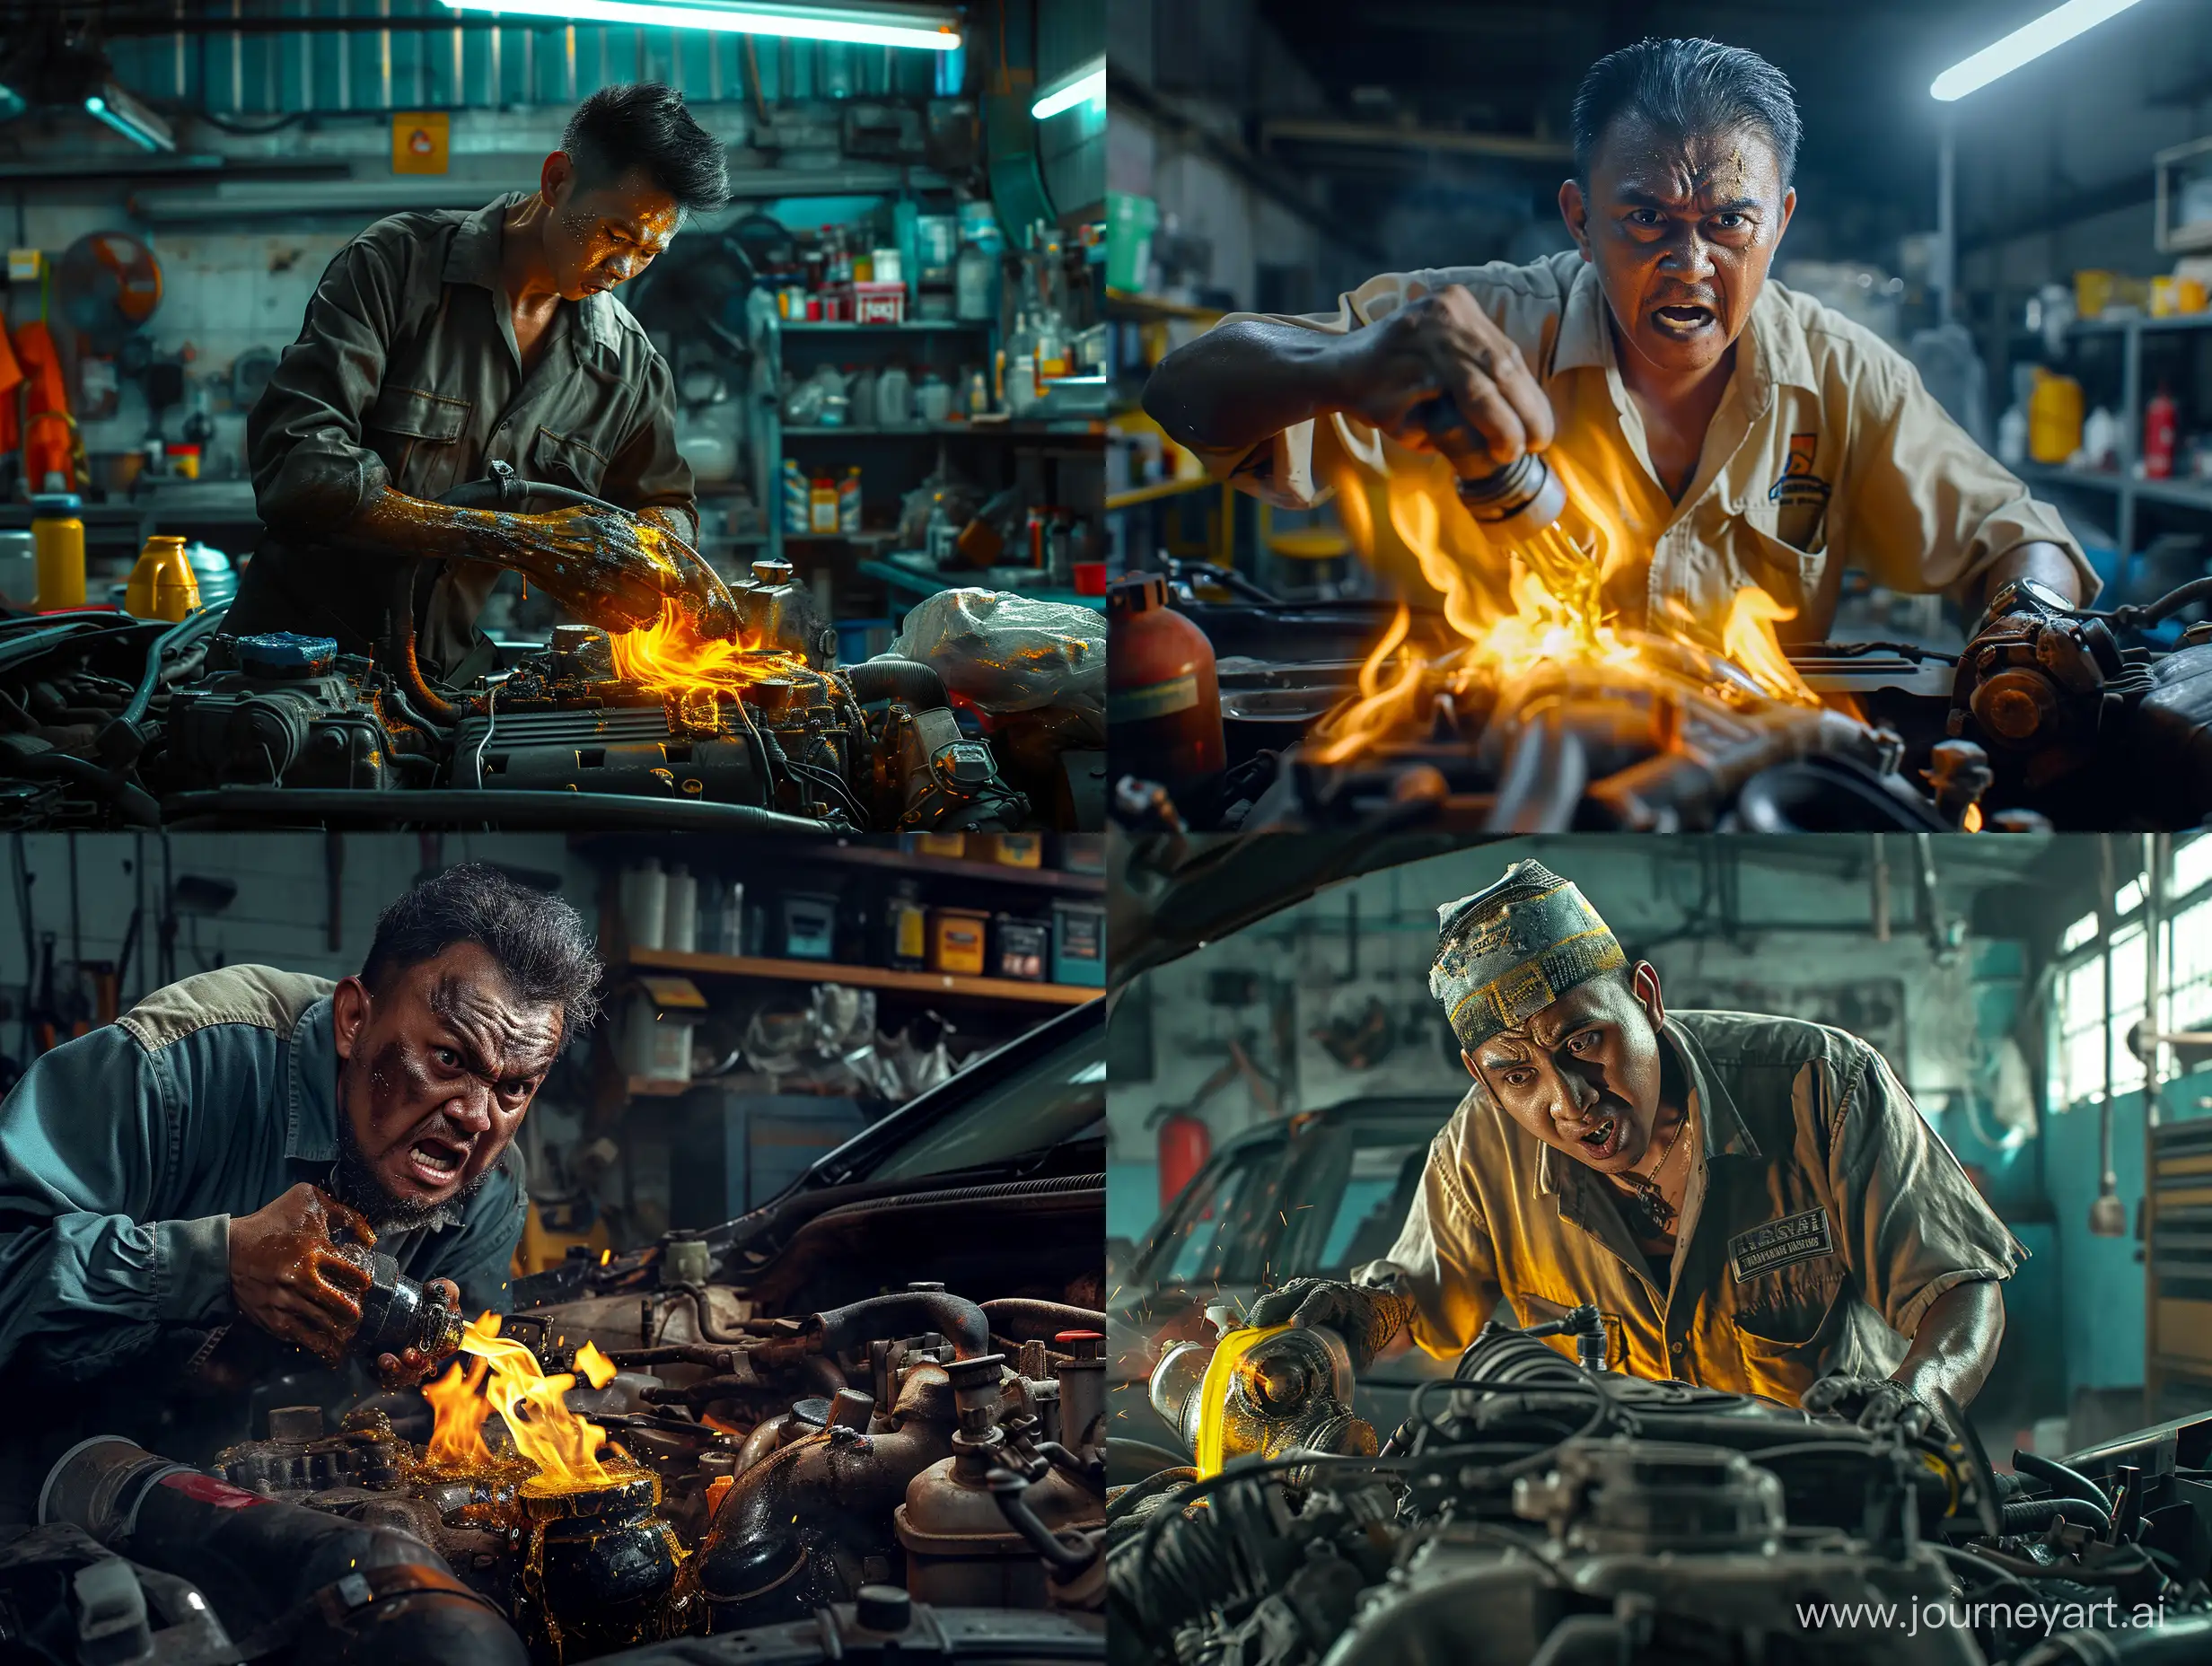 Fierce-Malay-Mechanic-Performing-Intense-Car-Maintenance-in-StateoftheArt-Workshop